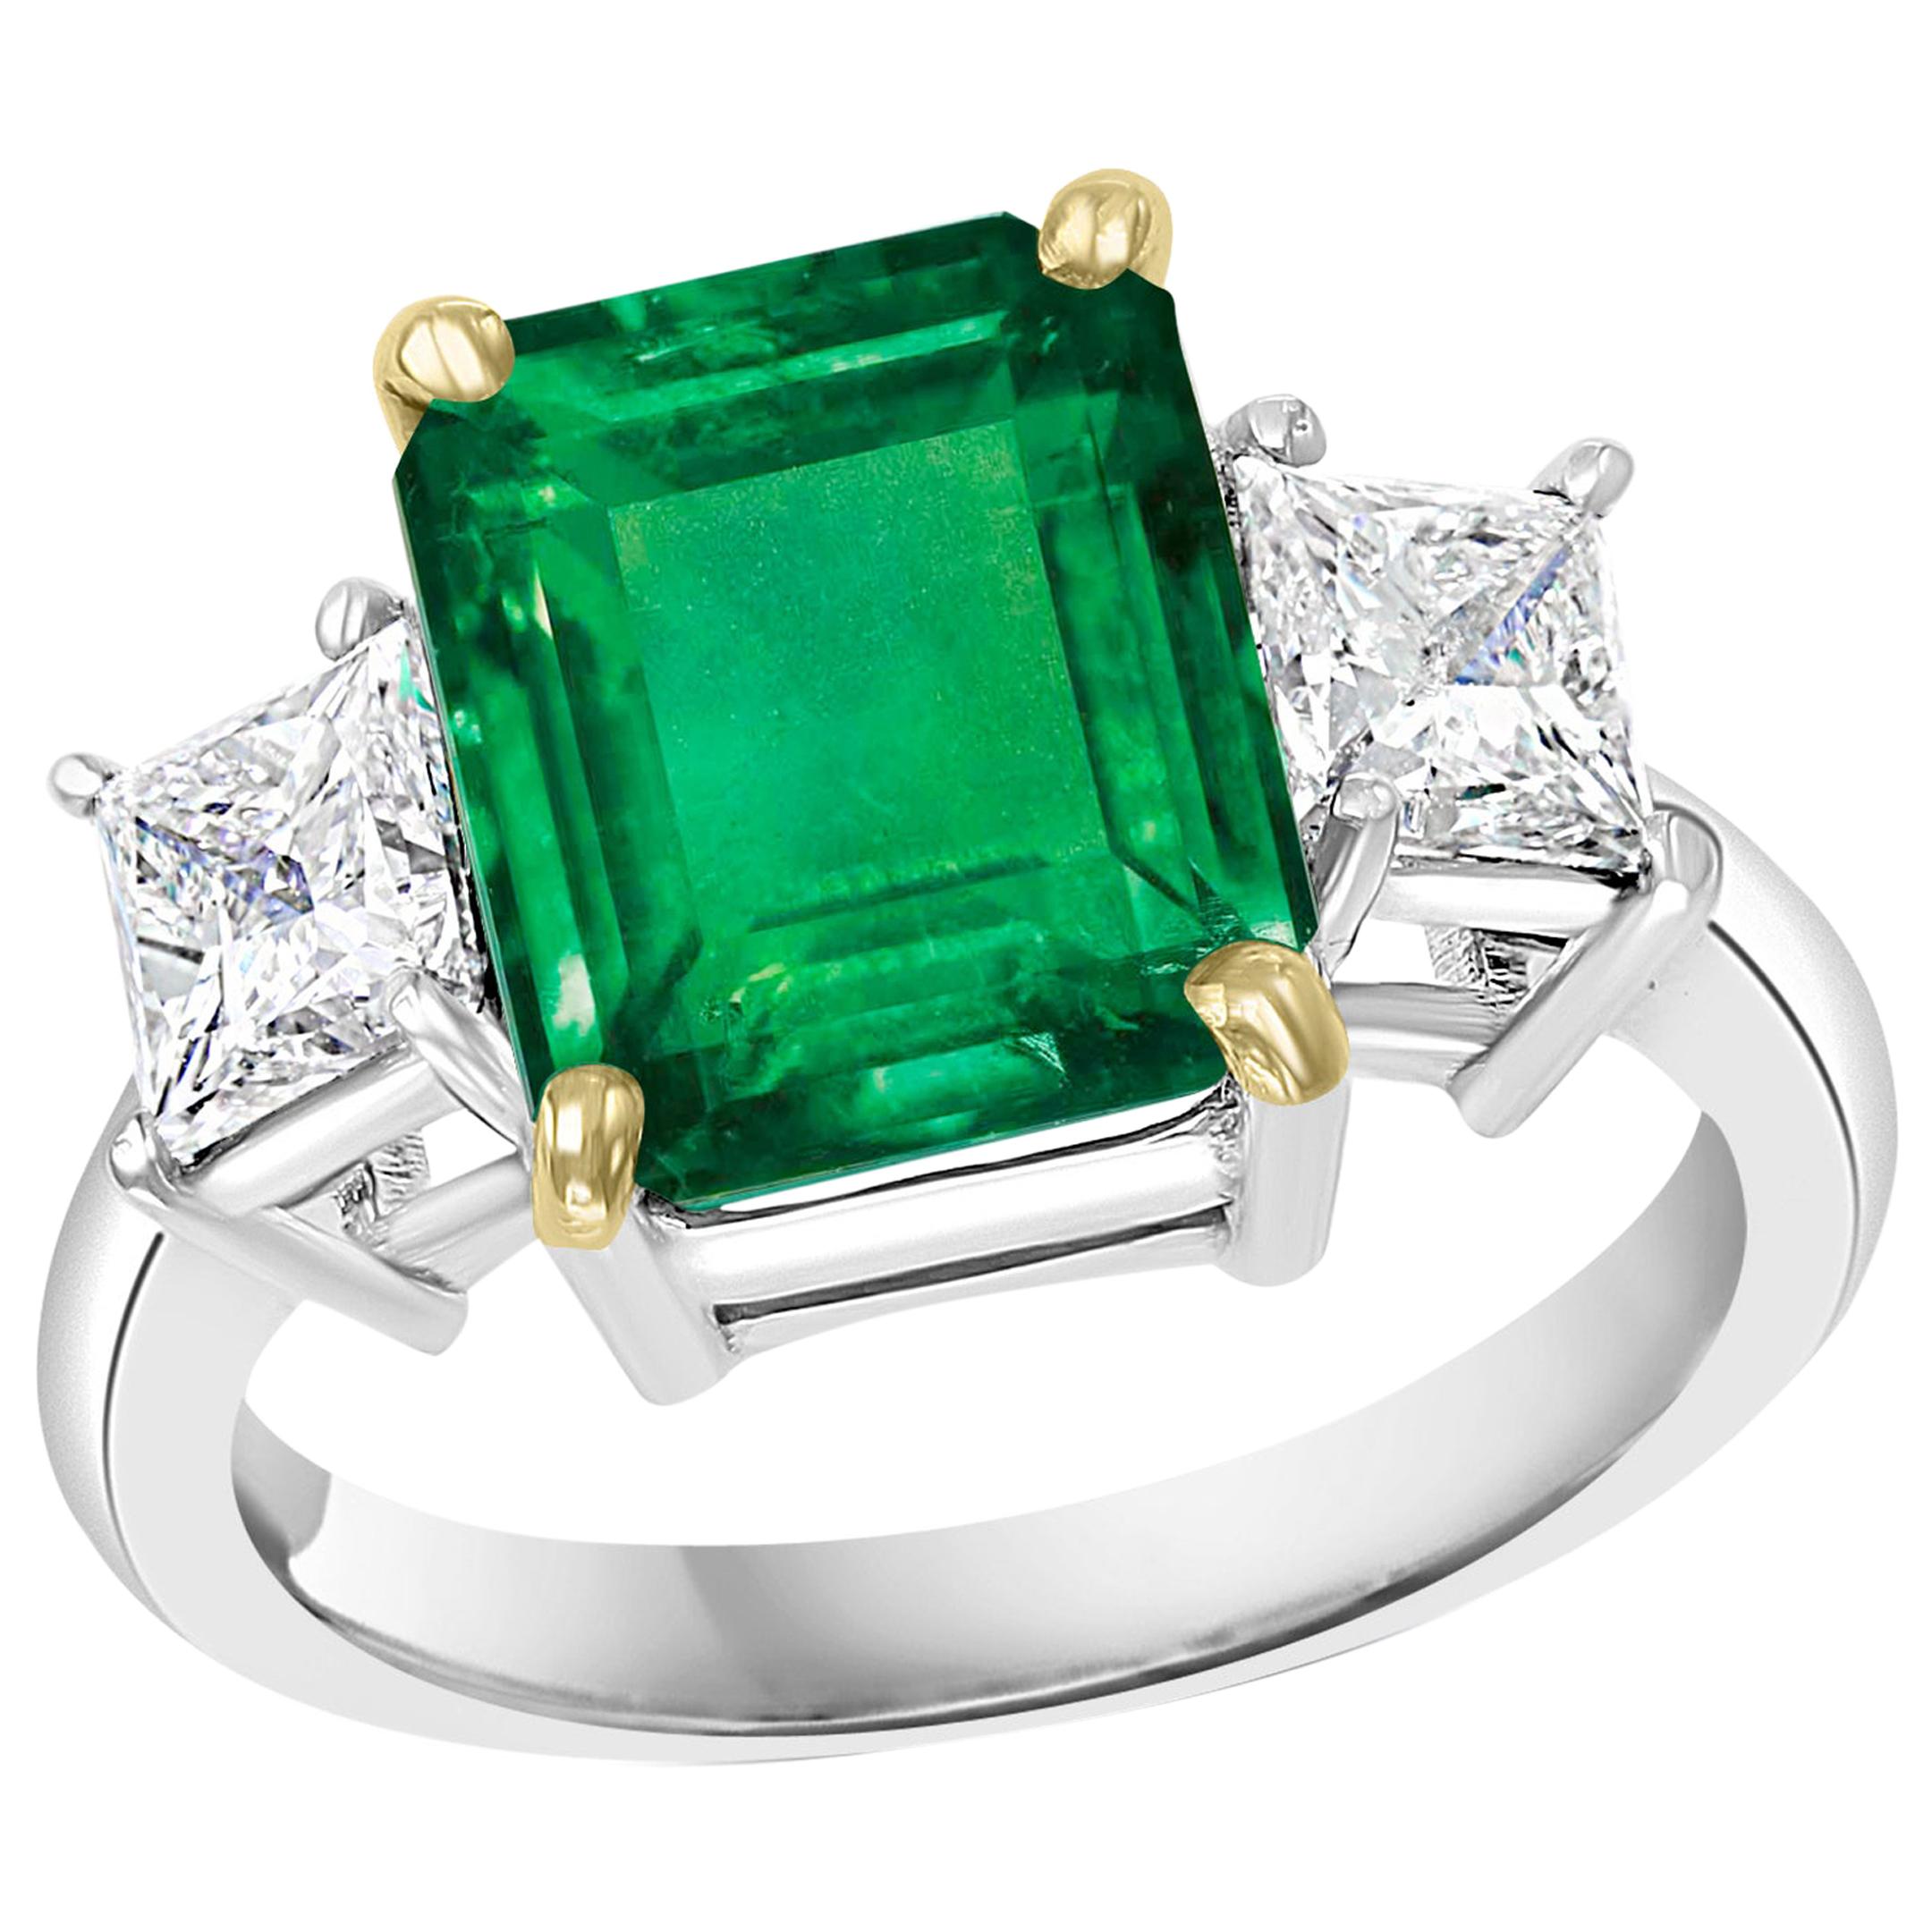 4.5 Carat Emerald Cut Colombian Emerald and 1.4 Carat Diamond 18 Karat Gold Ring